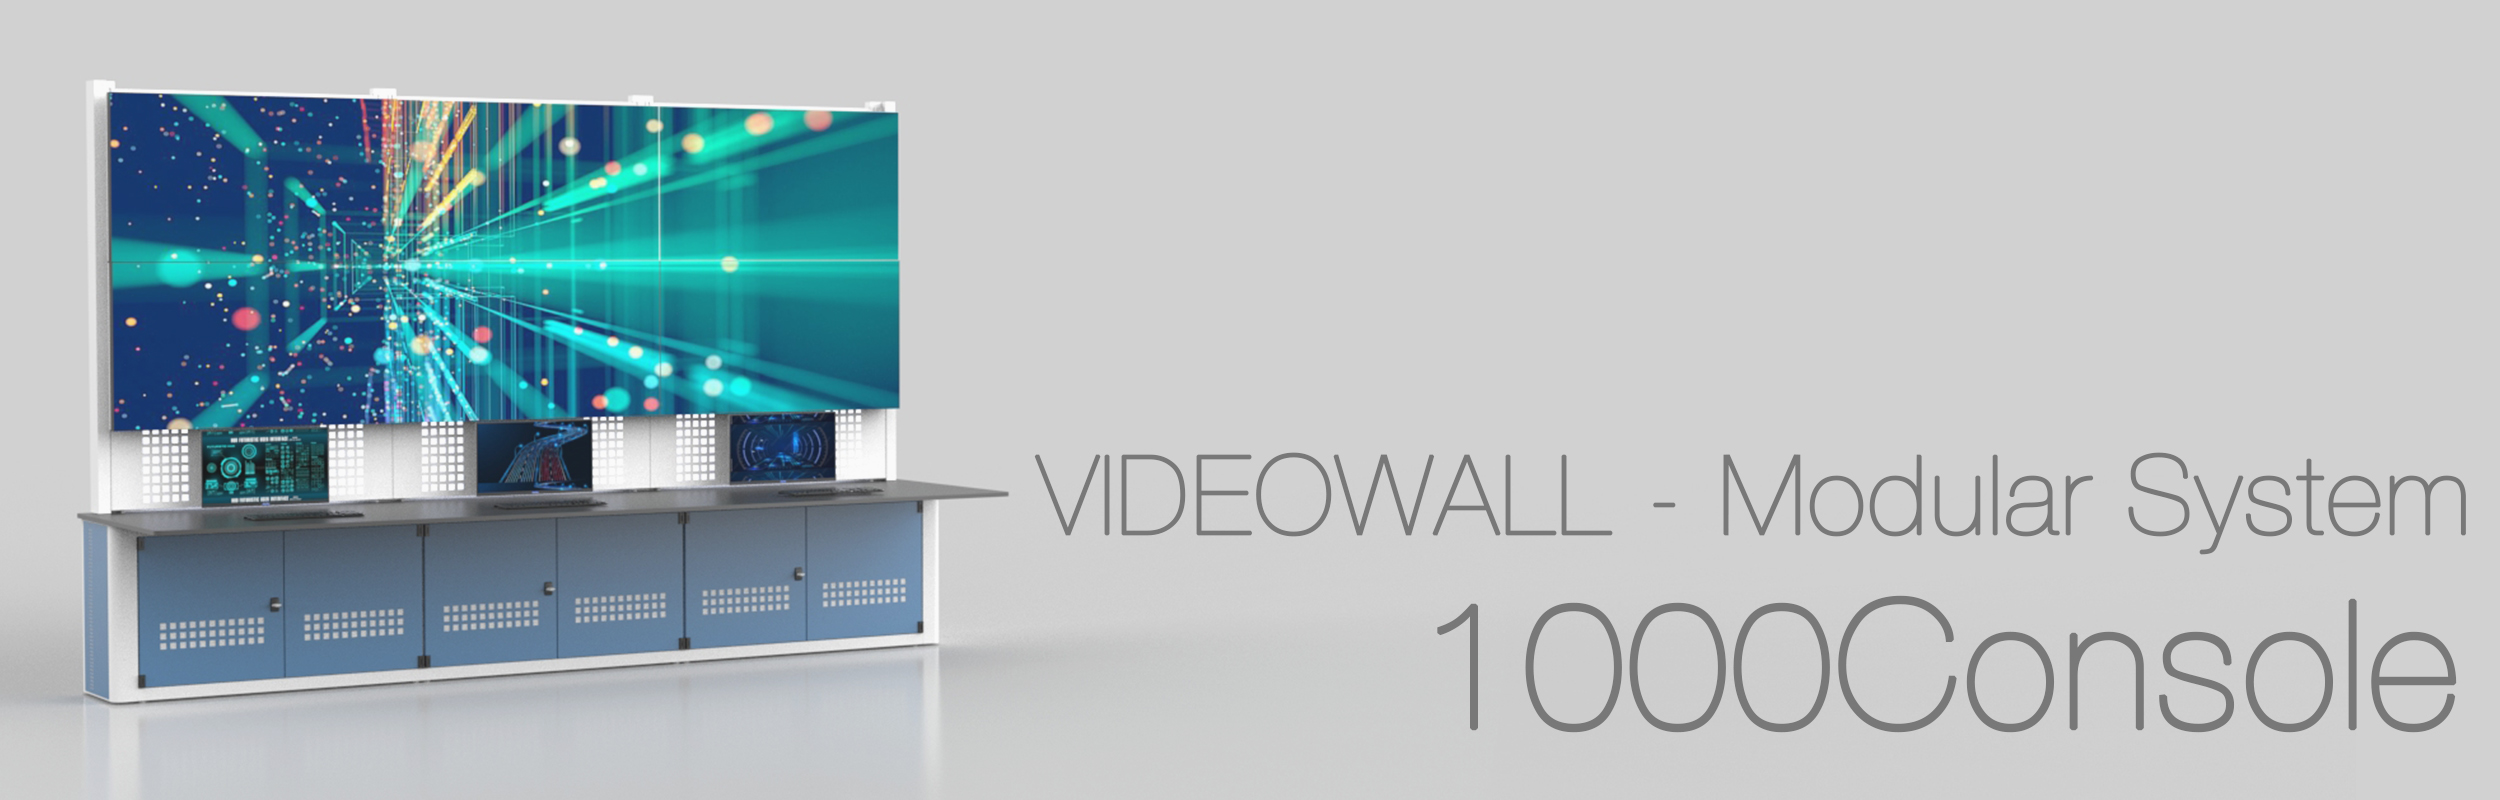 Videowall 1000Console